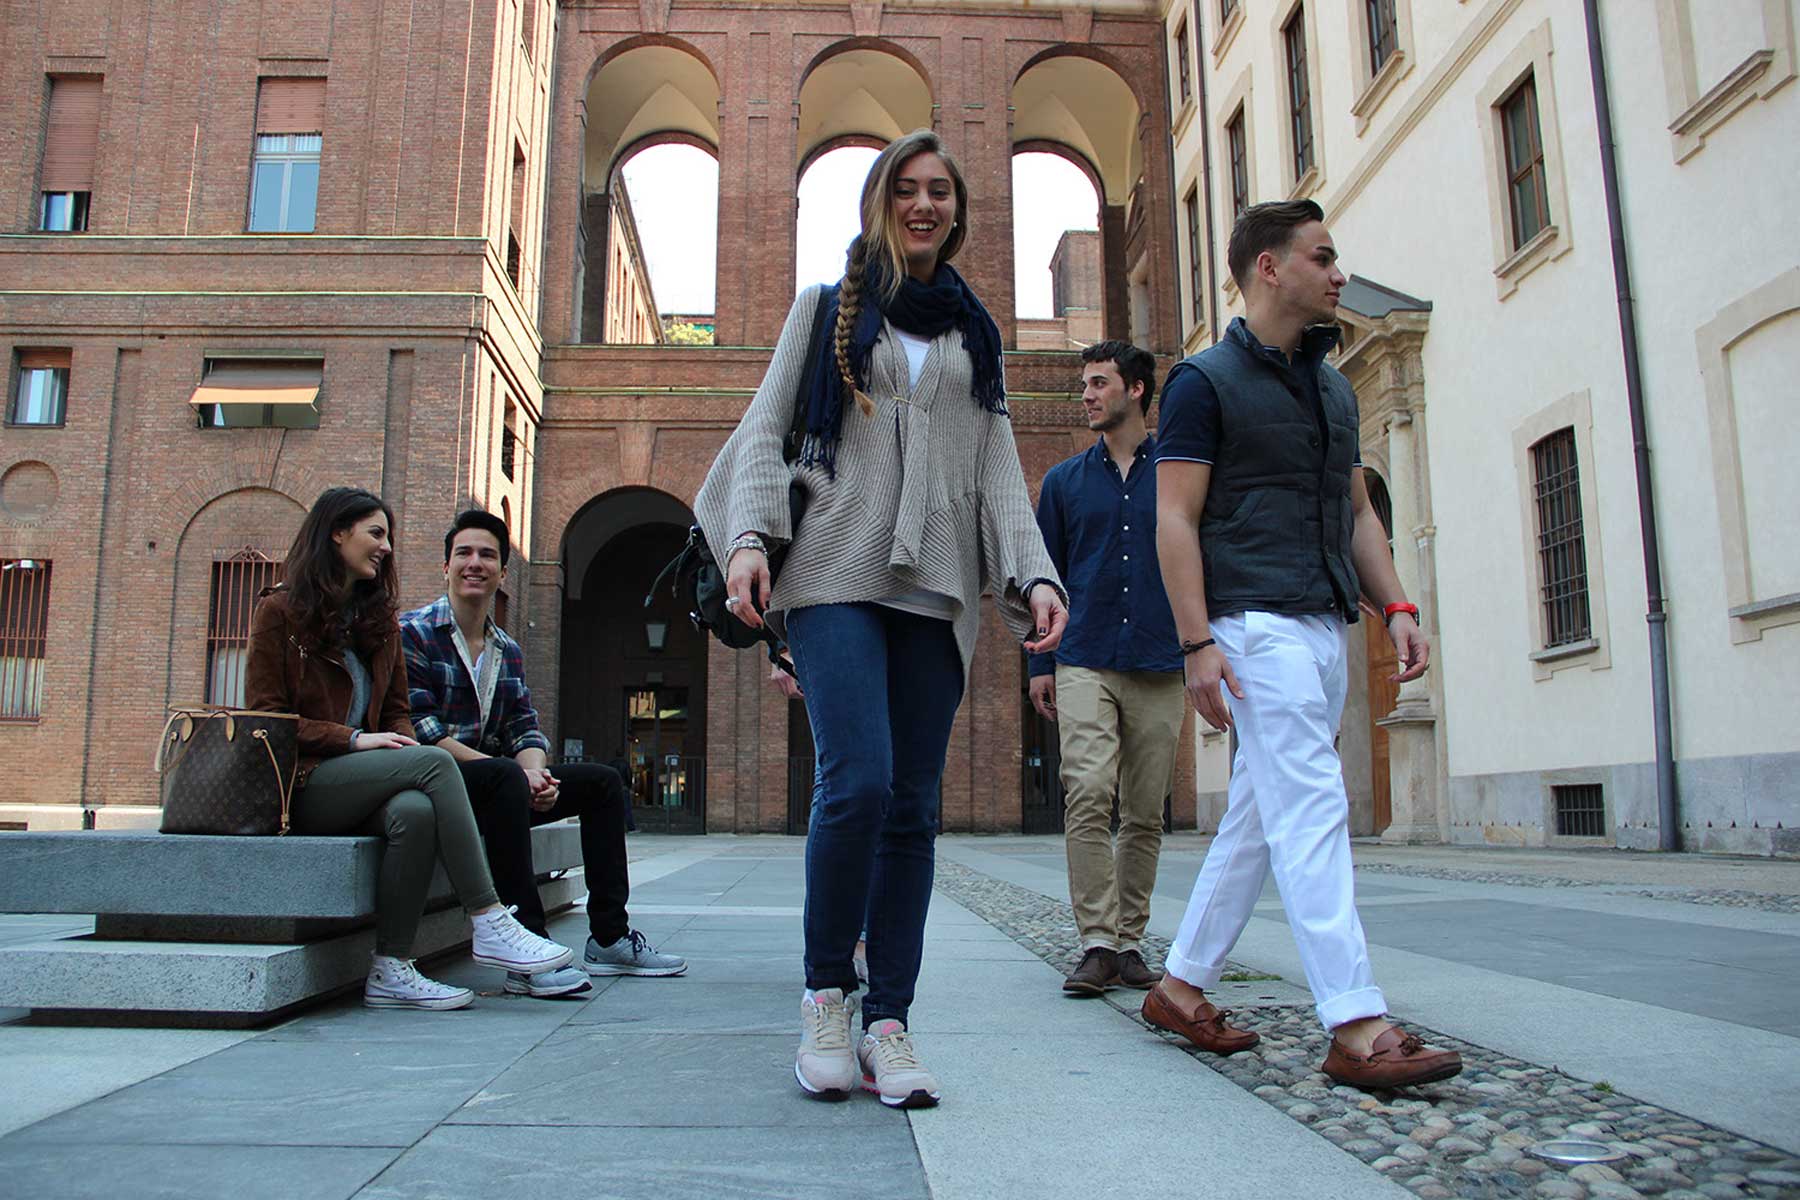 Photo: Students sitting walking through plaza